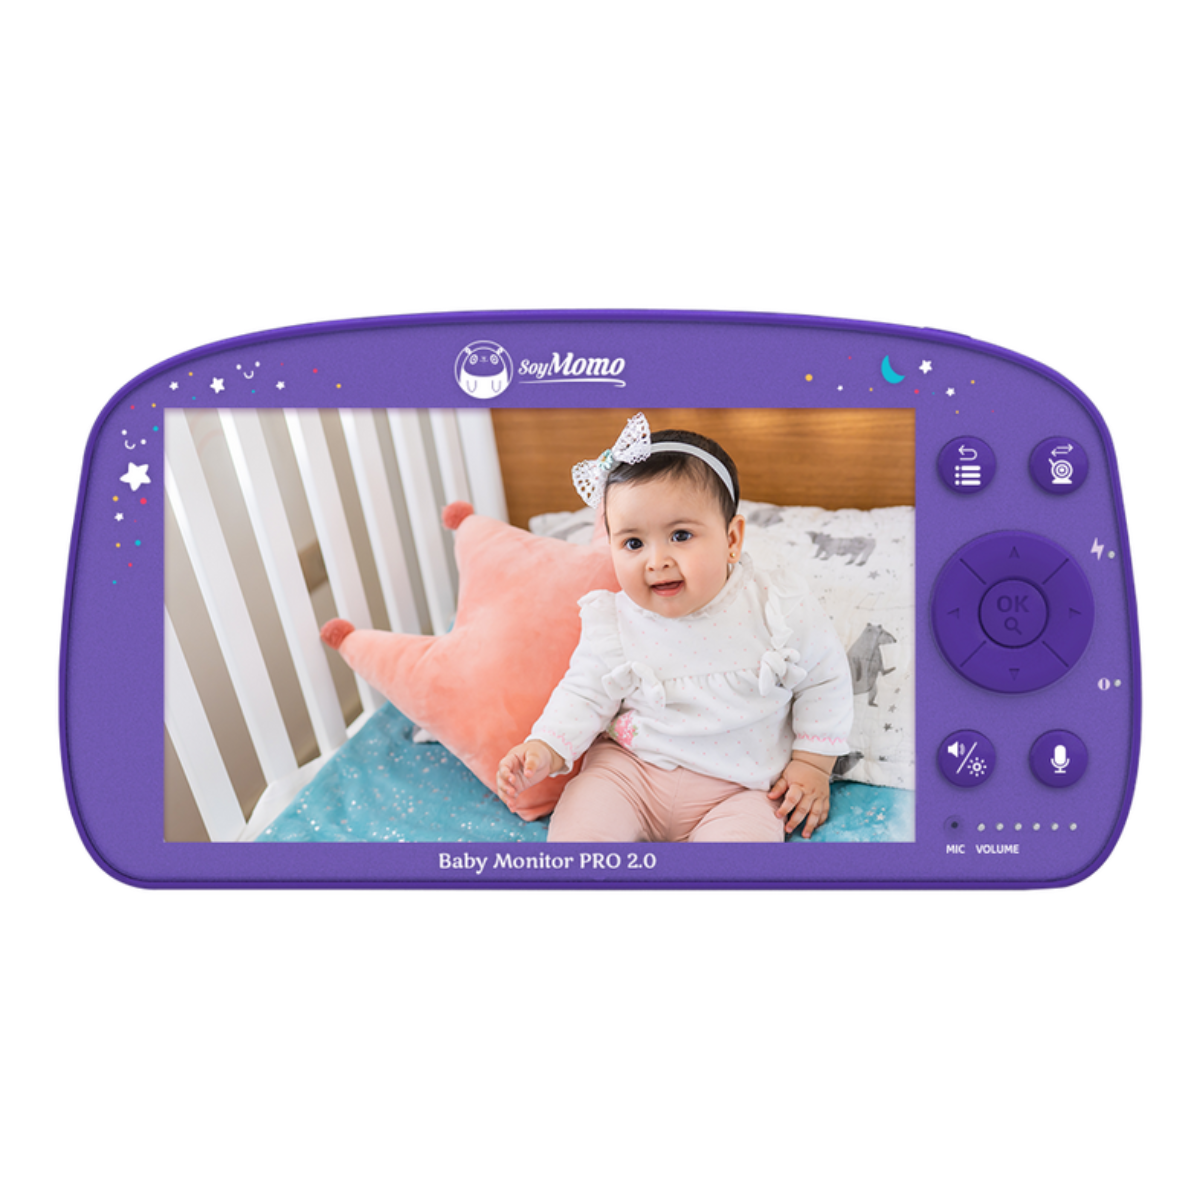 Monitor Pro Baby 2.0 SOYMOMO Babyphone